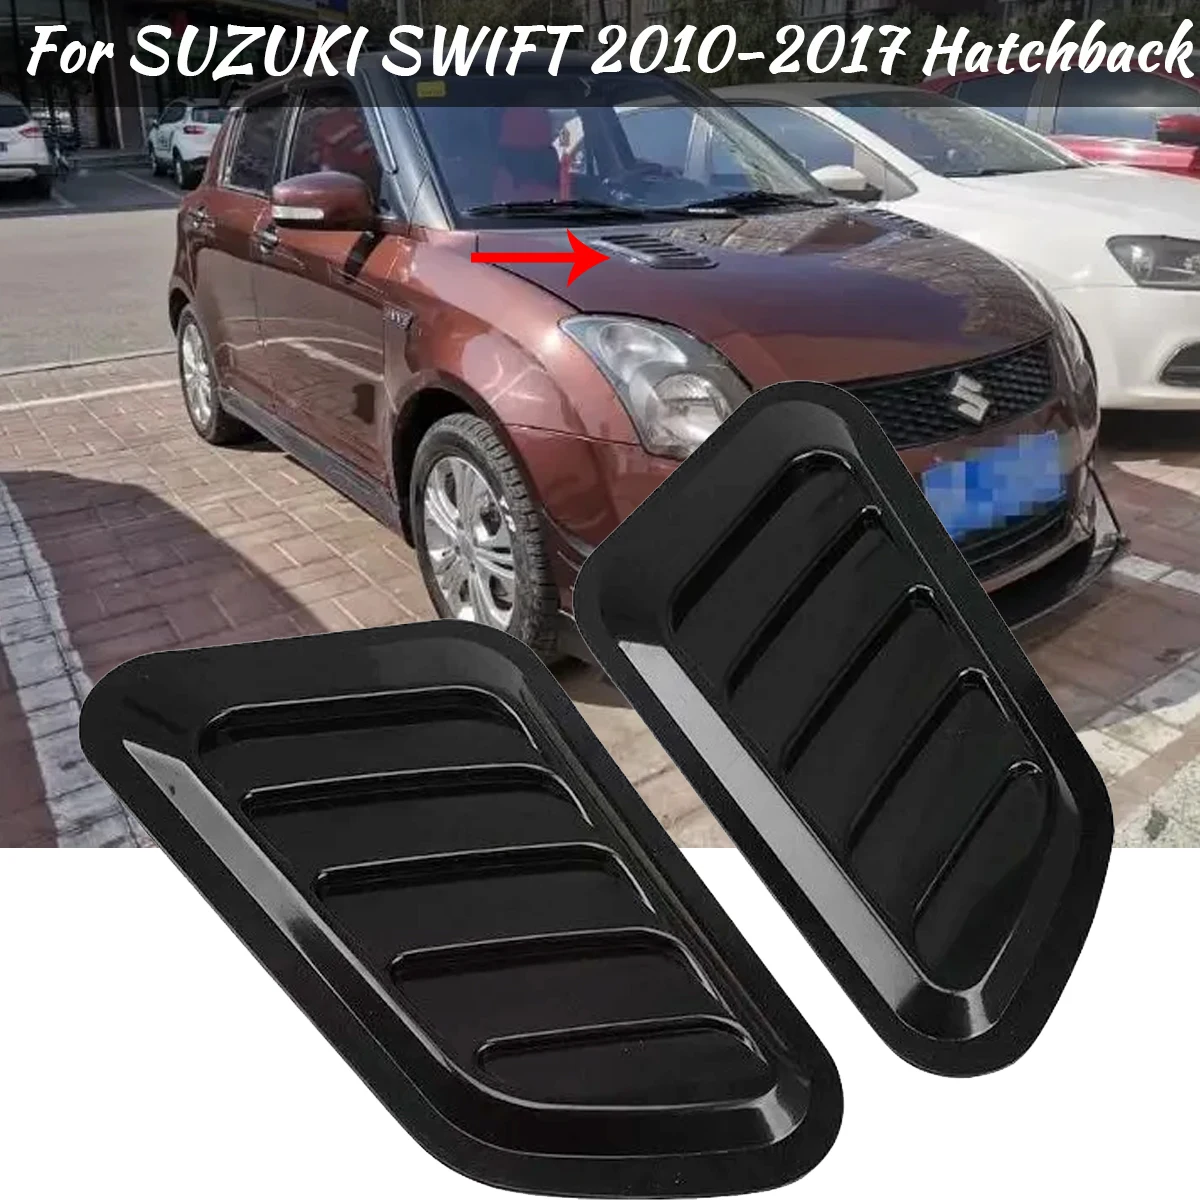 

Front Hood Side Air Vent Intake Scoop Cover Decoration Sticker Universal For SUZUKI SWIFT 2010-2017 Hatchback Car Accessories